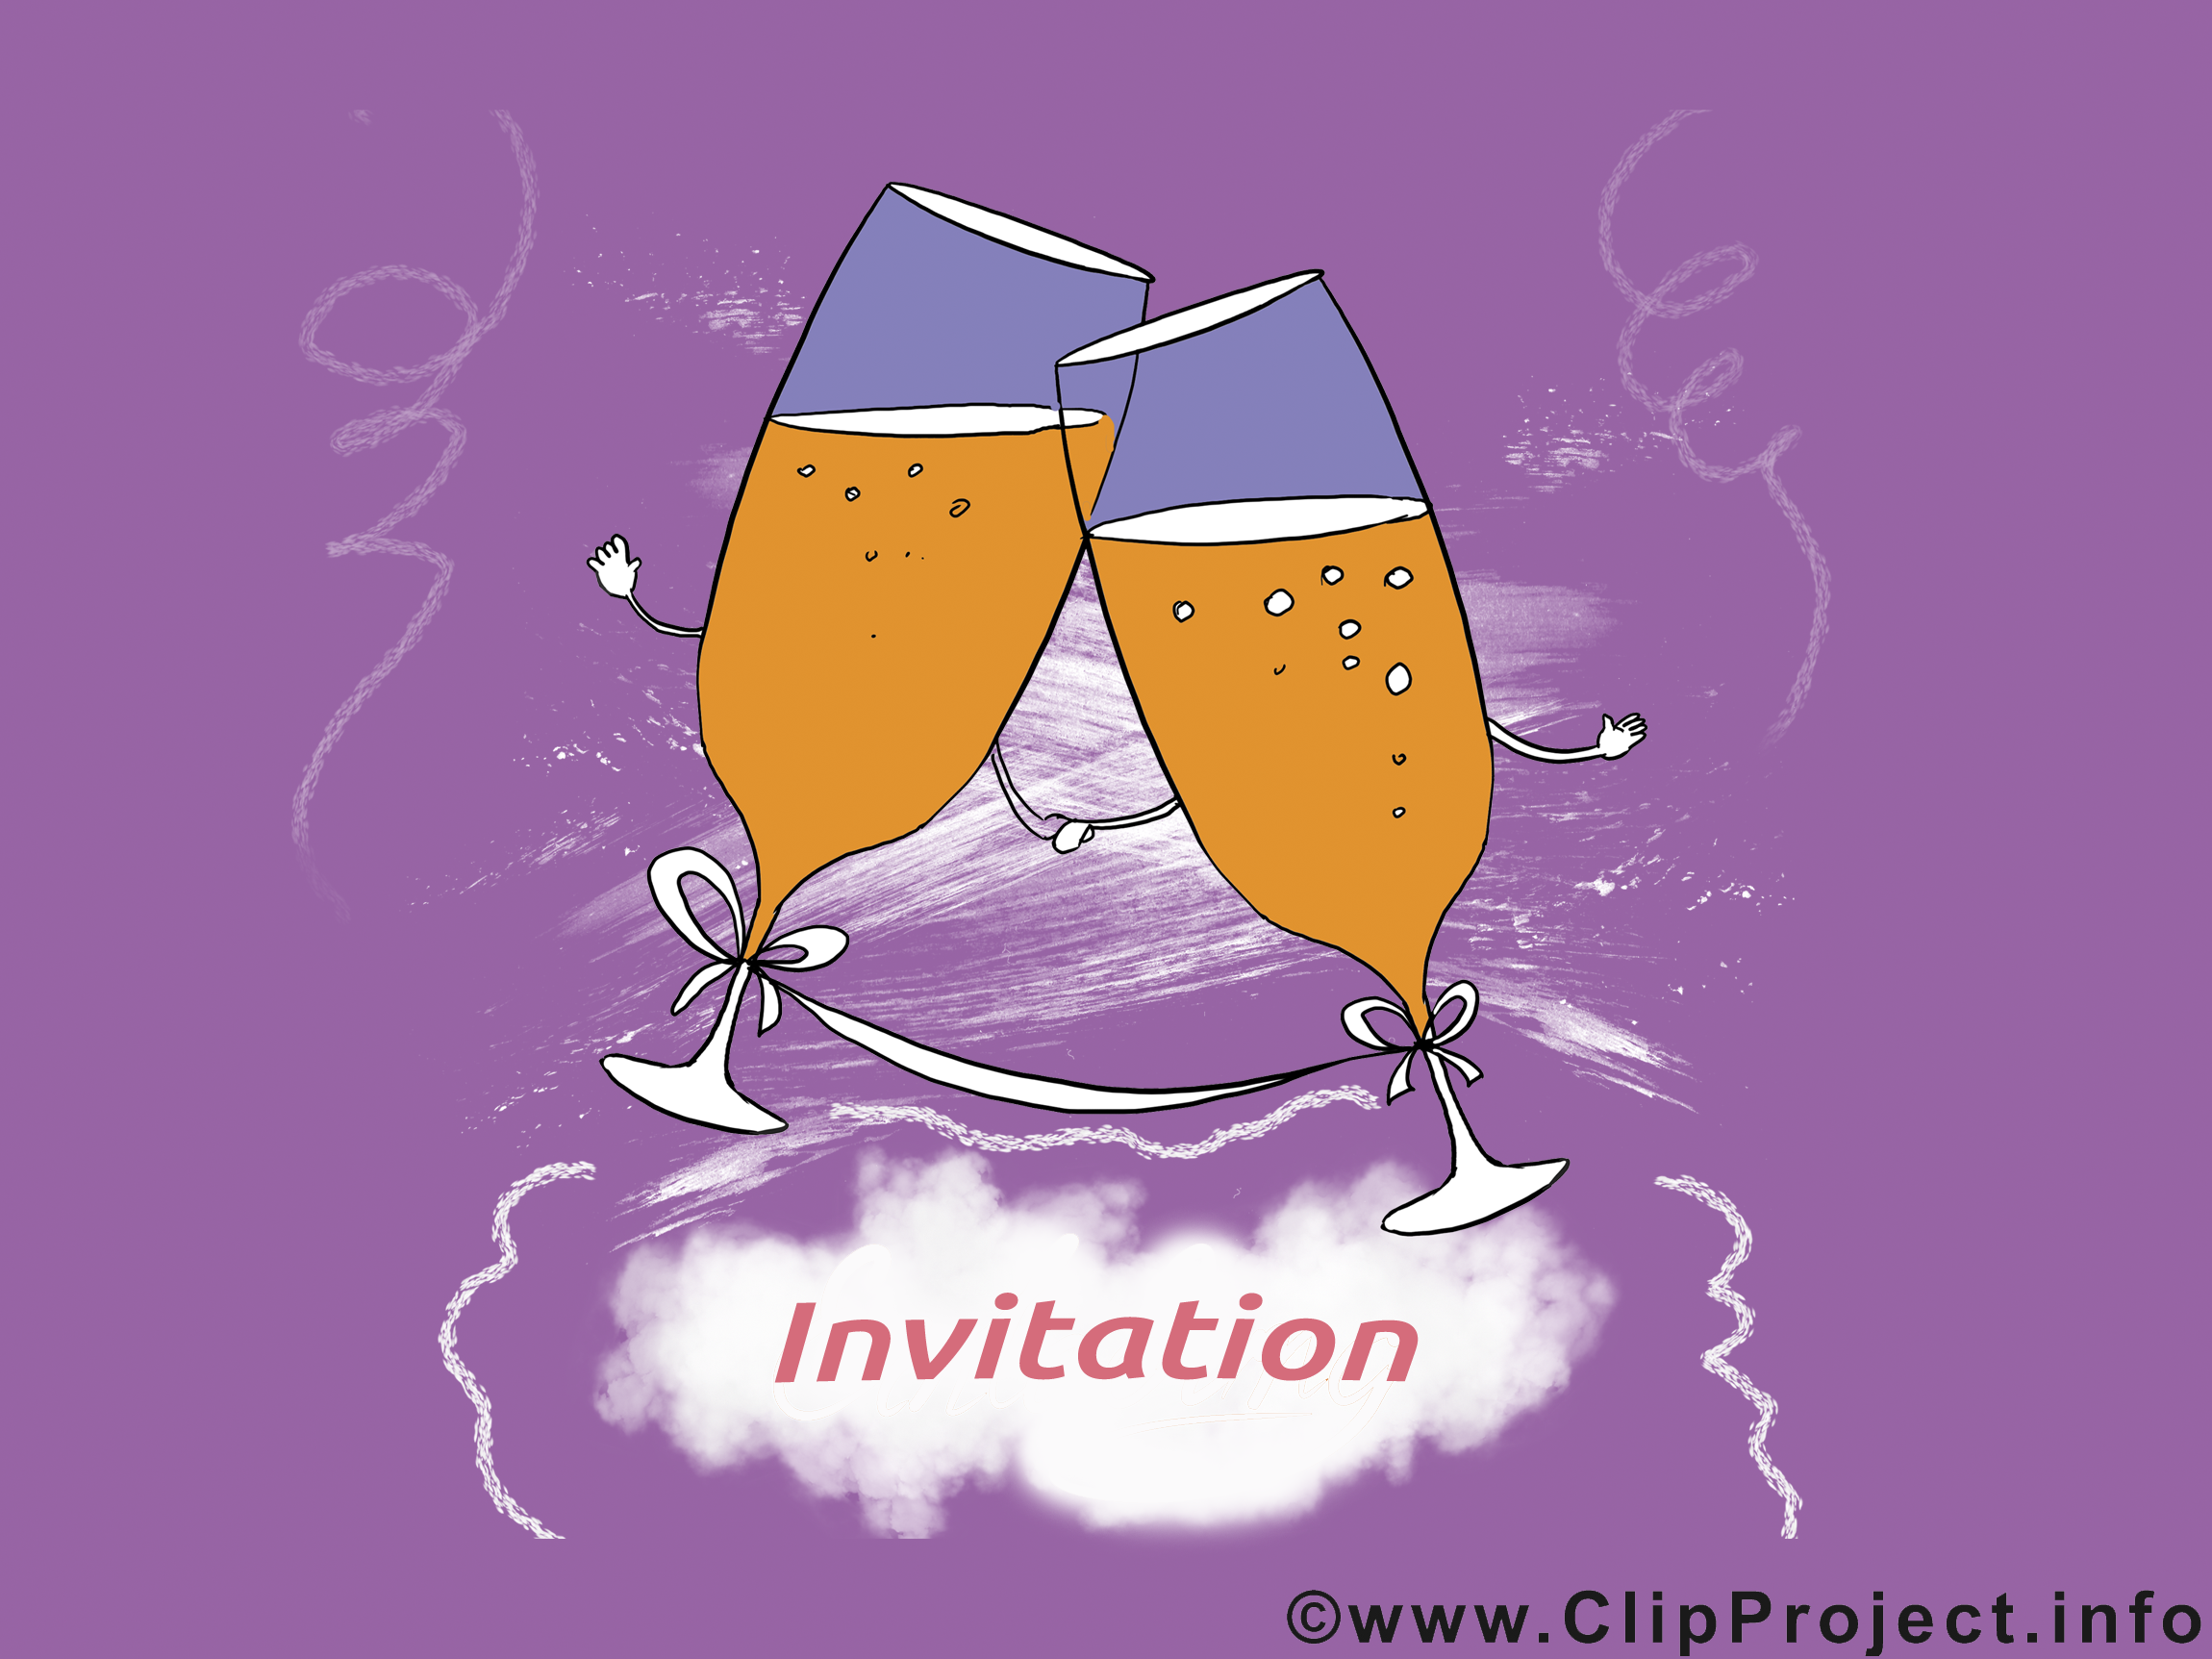 Verres image gratuite - Invitation illustration